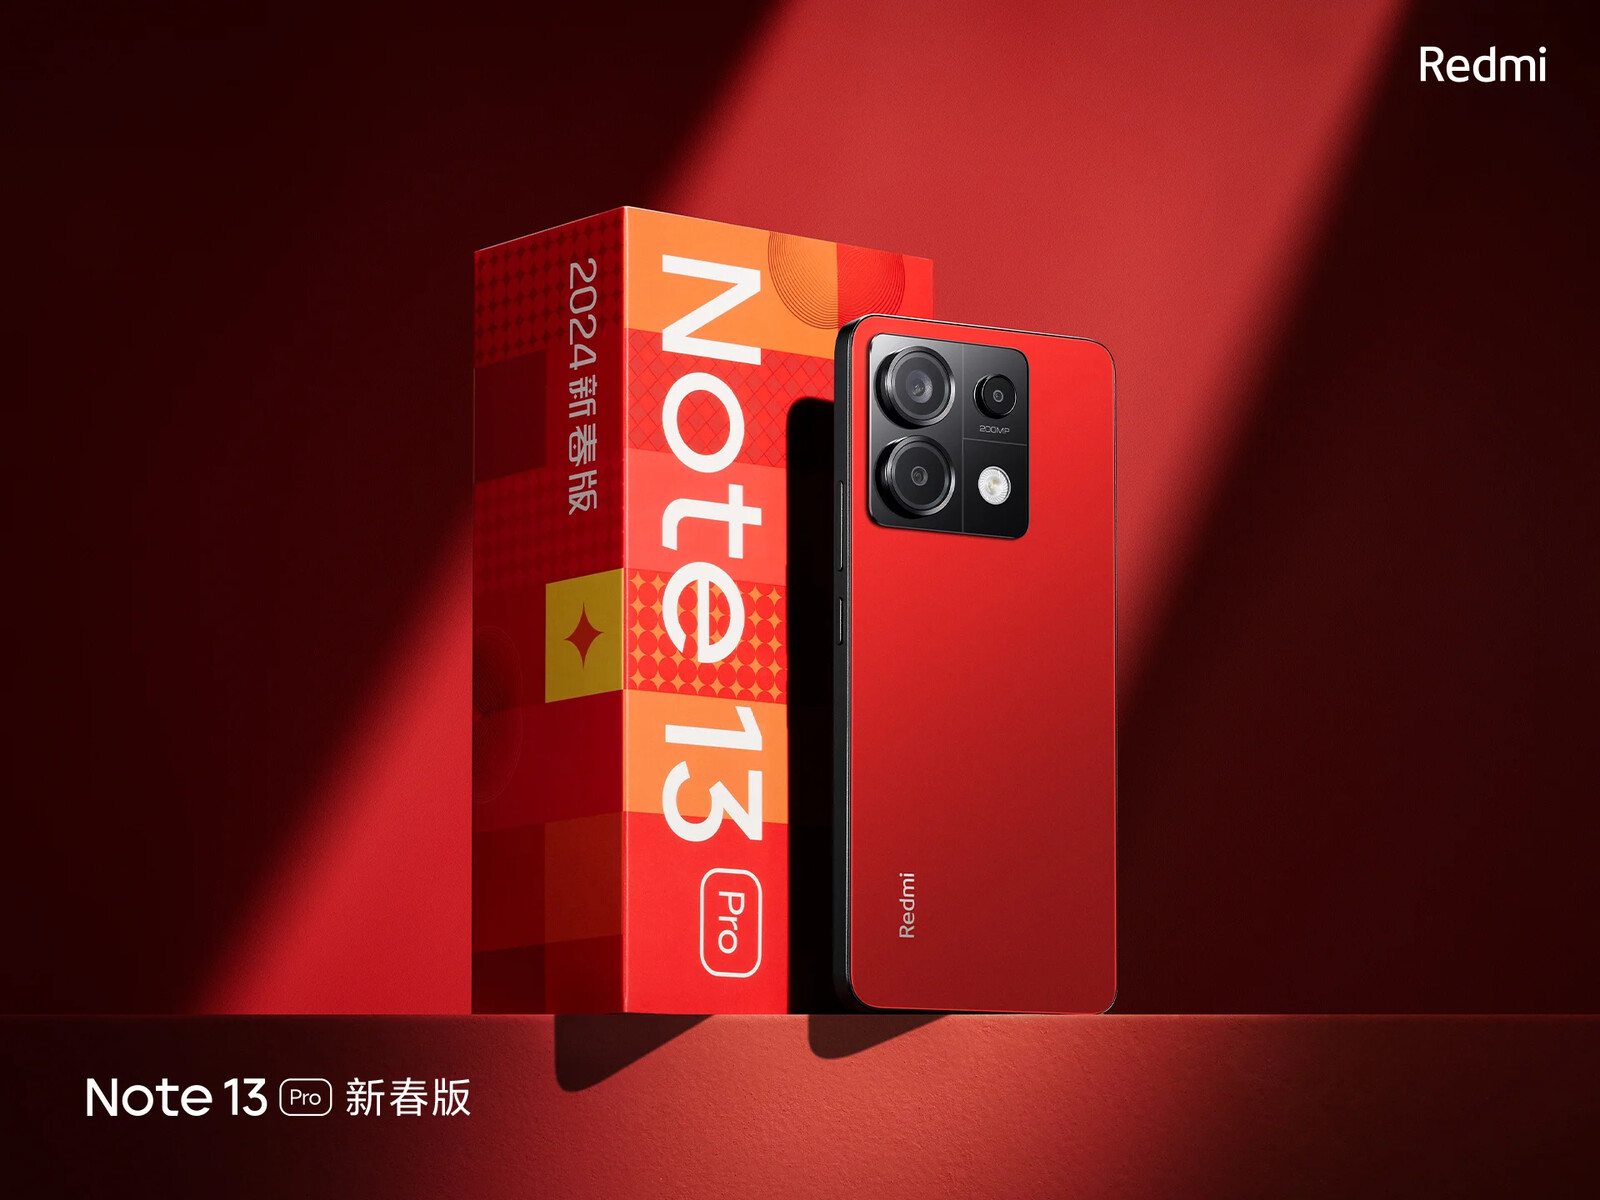 Not just Redmi Note 13: Xiaomi will unveil Redmi Watch 4, Redmi